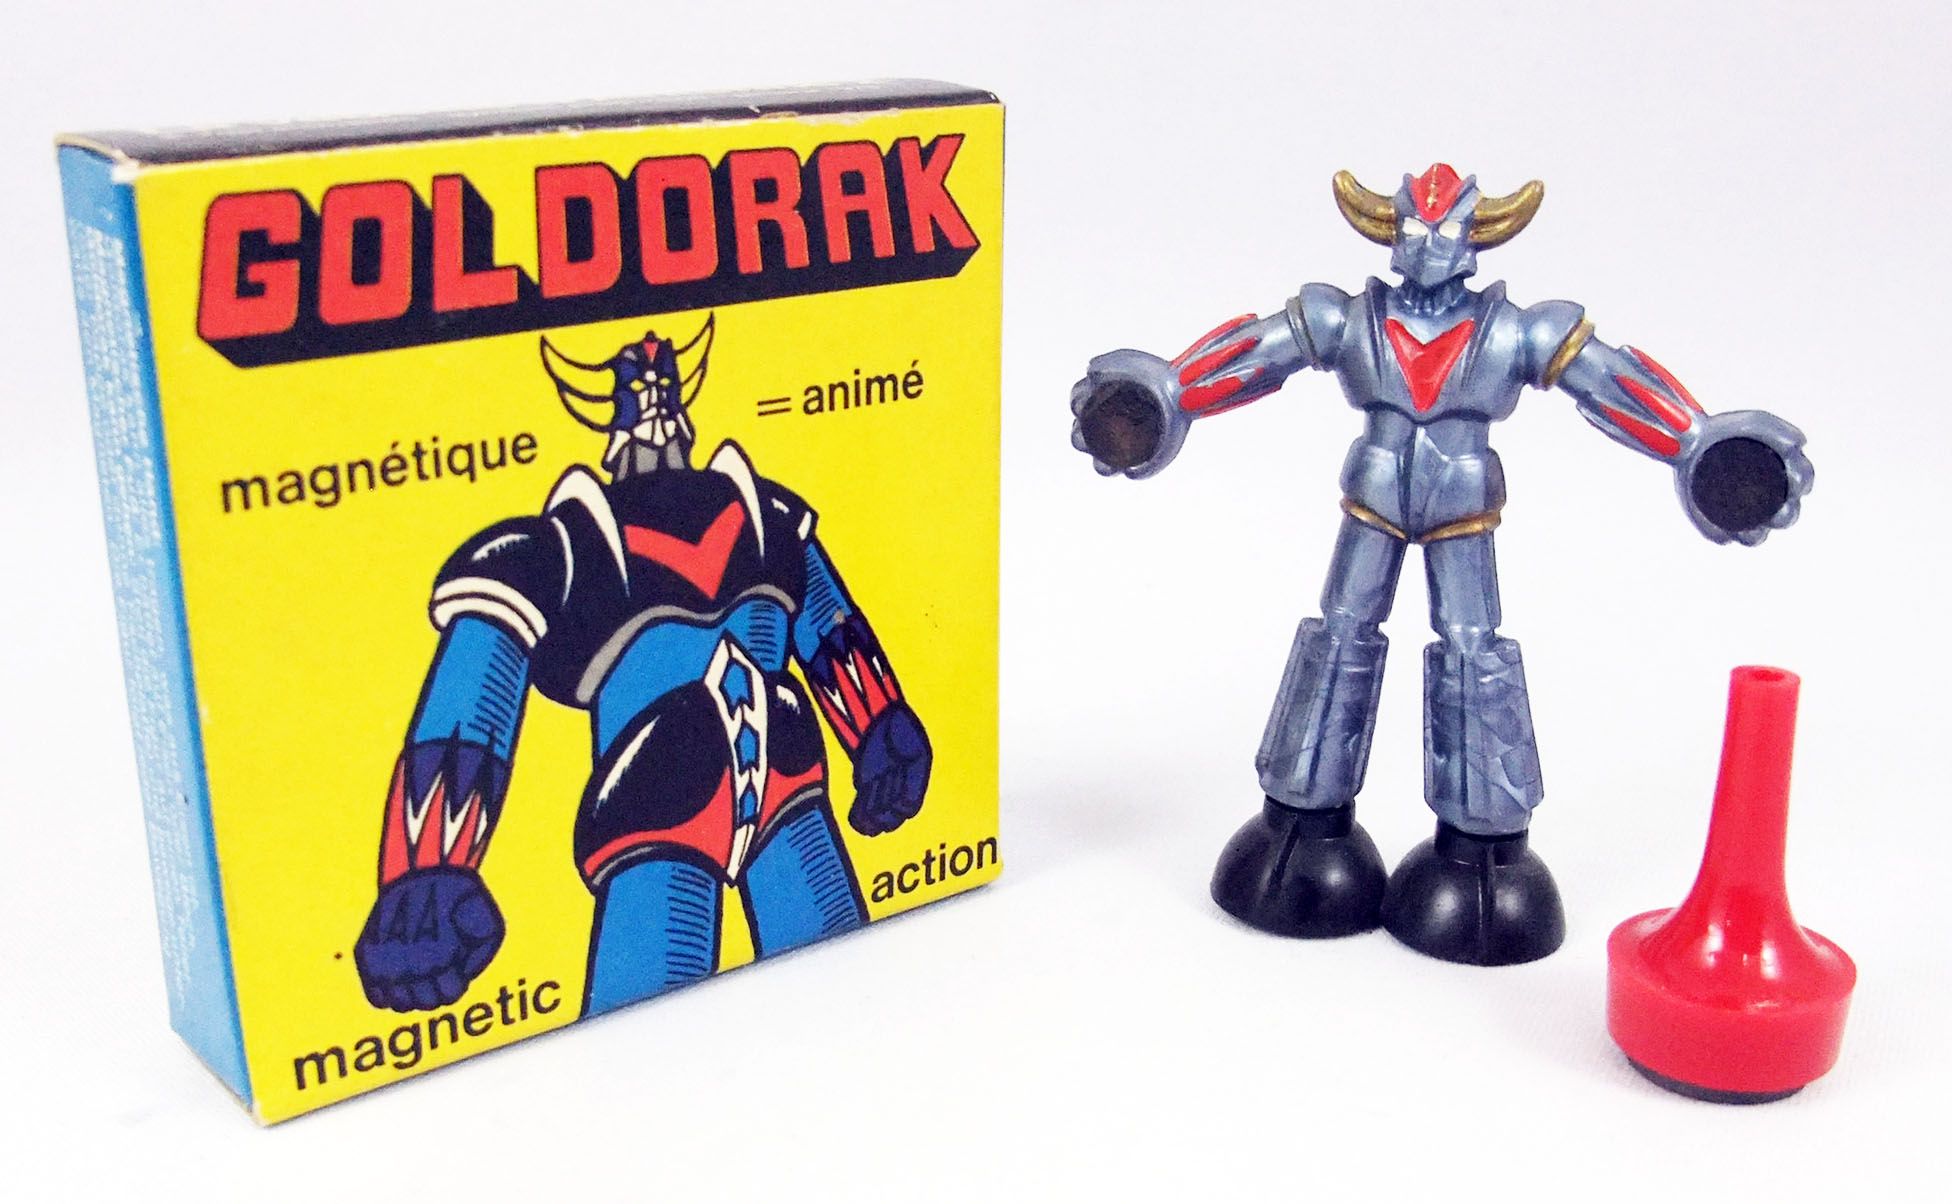 Goldorak - Figurine magnétique Magneto n°3136 - Goldorak (coloris bleu  métal)